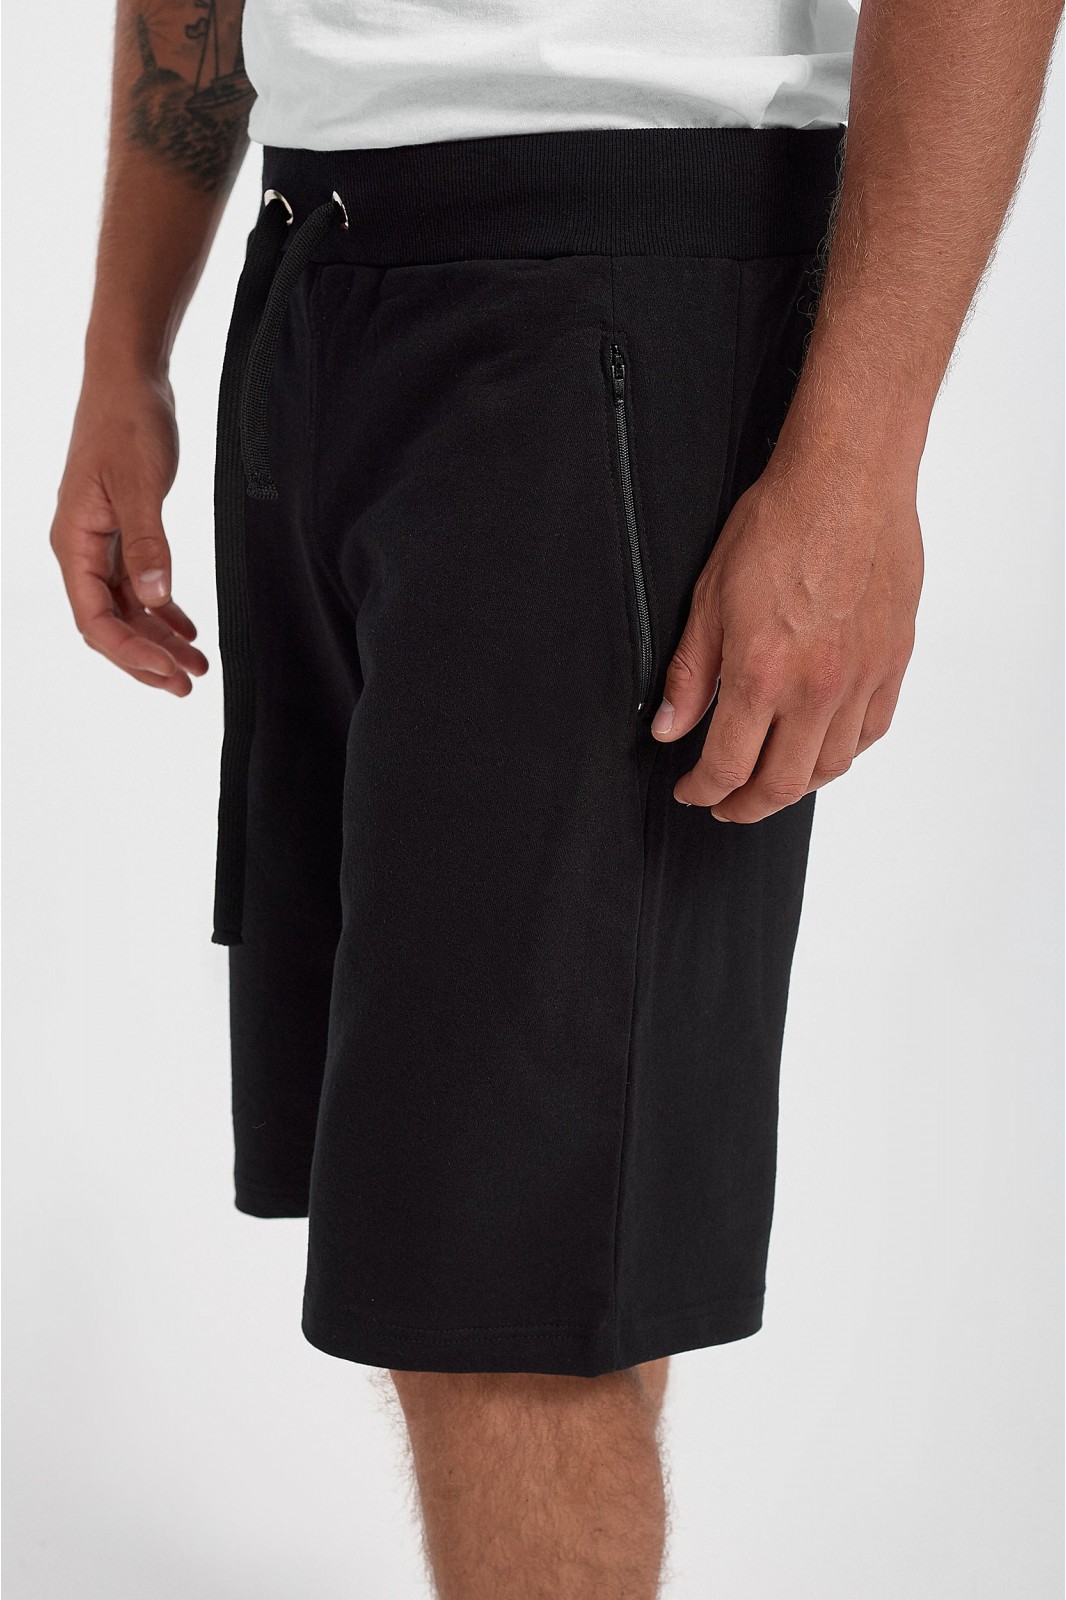 Mens cotton shorts BODY MOVE 111 Black